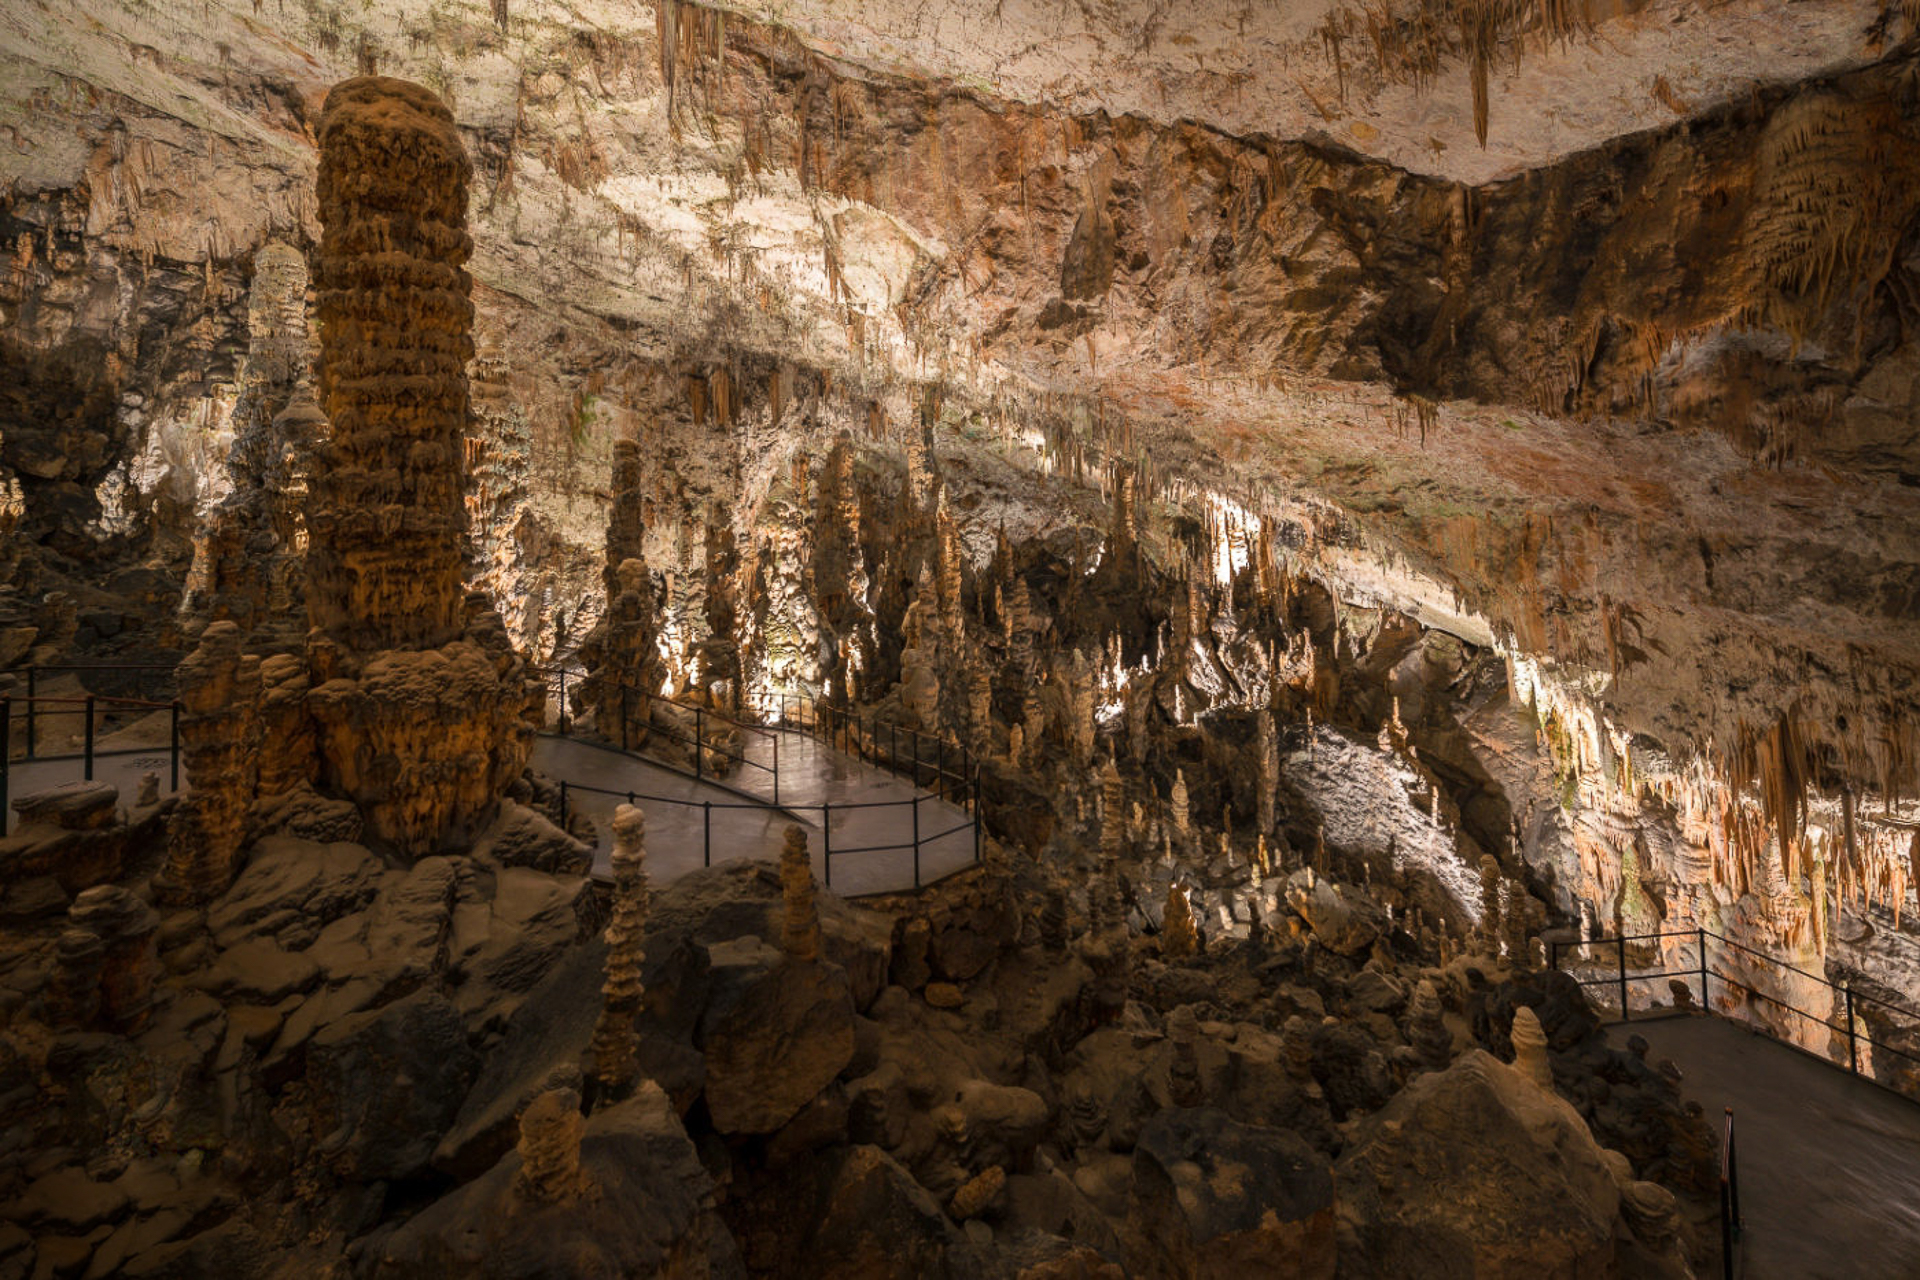 The path for tourist through the Postojna Cave